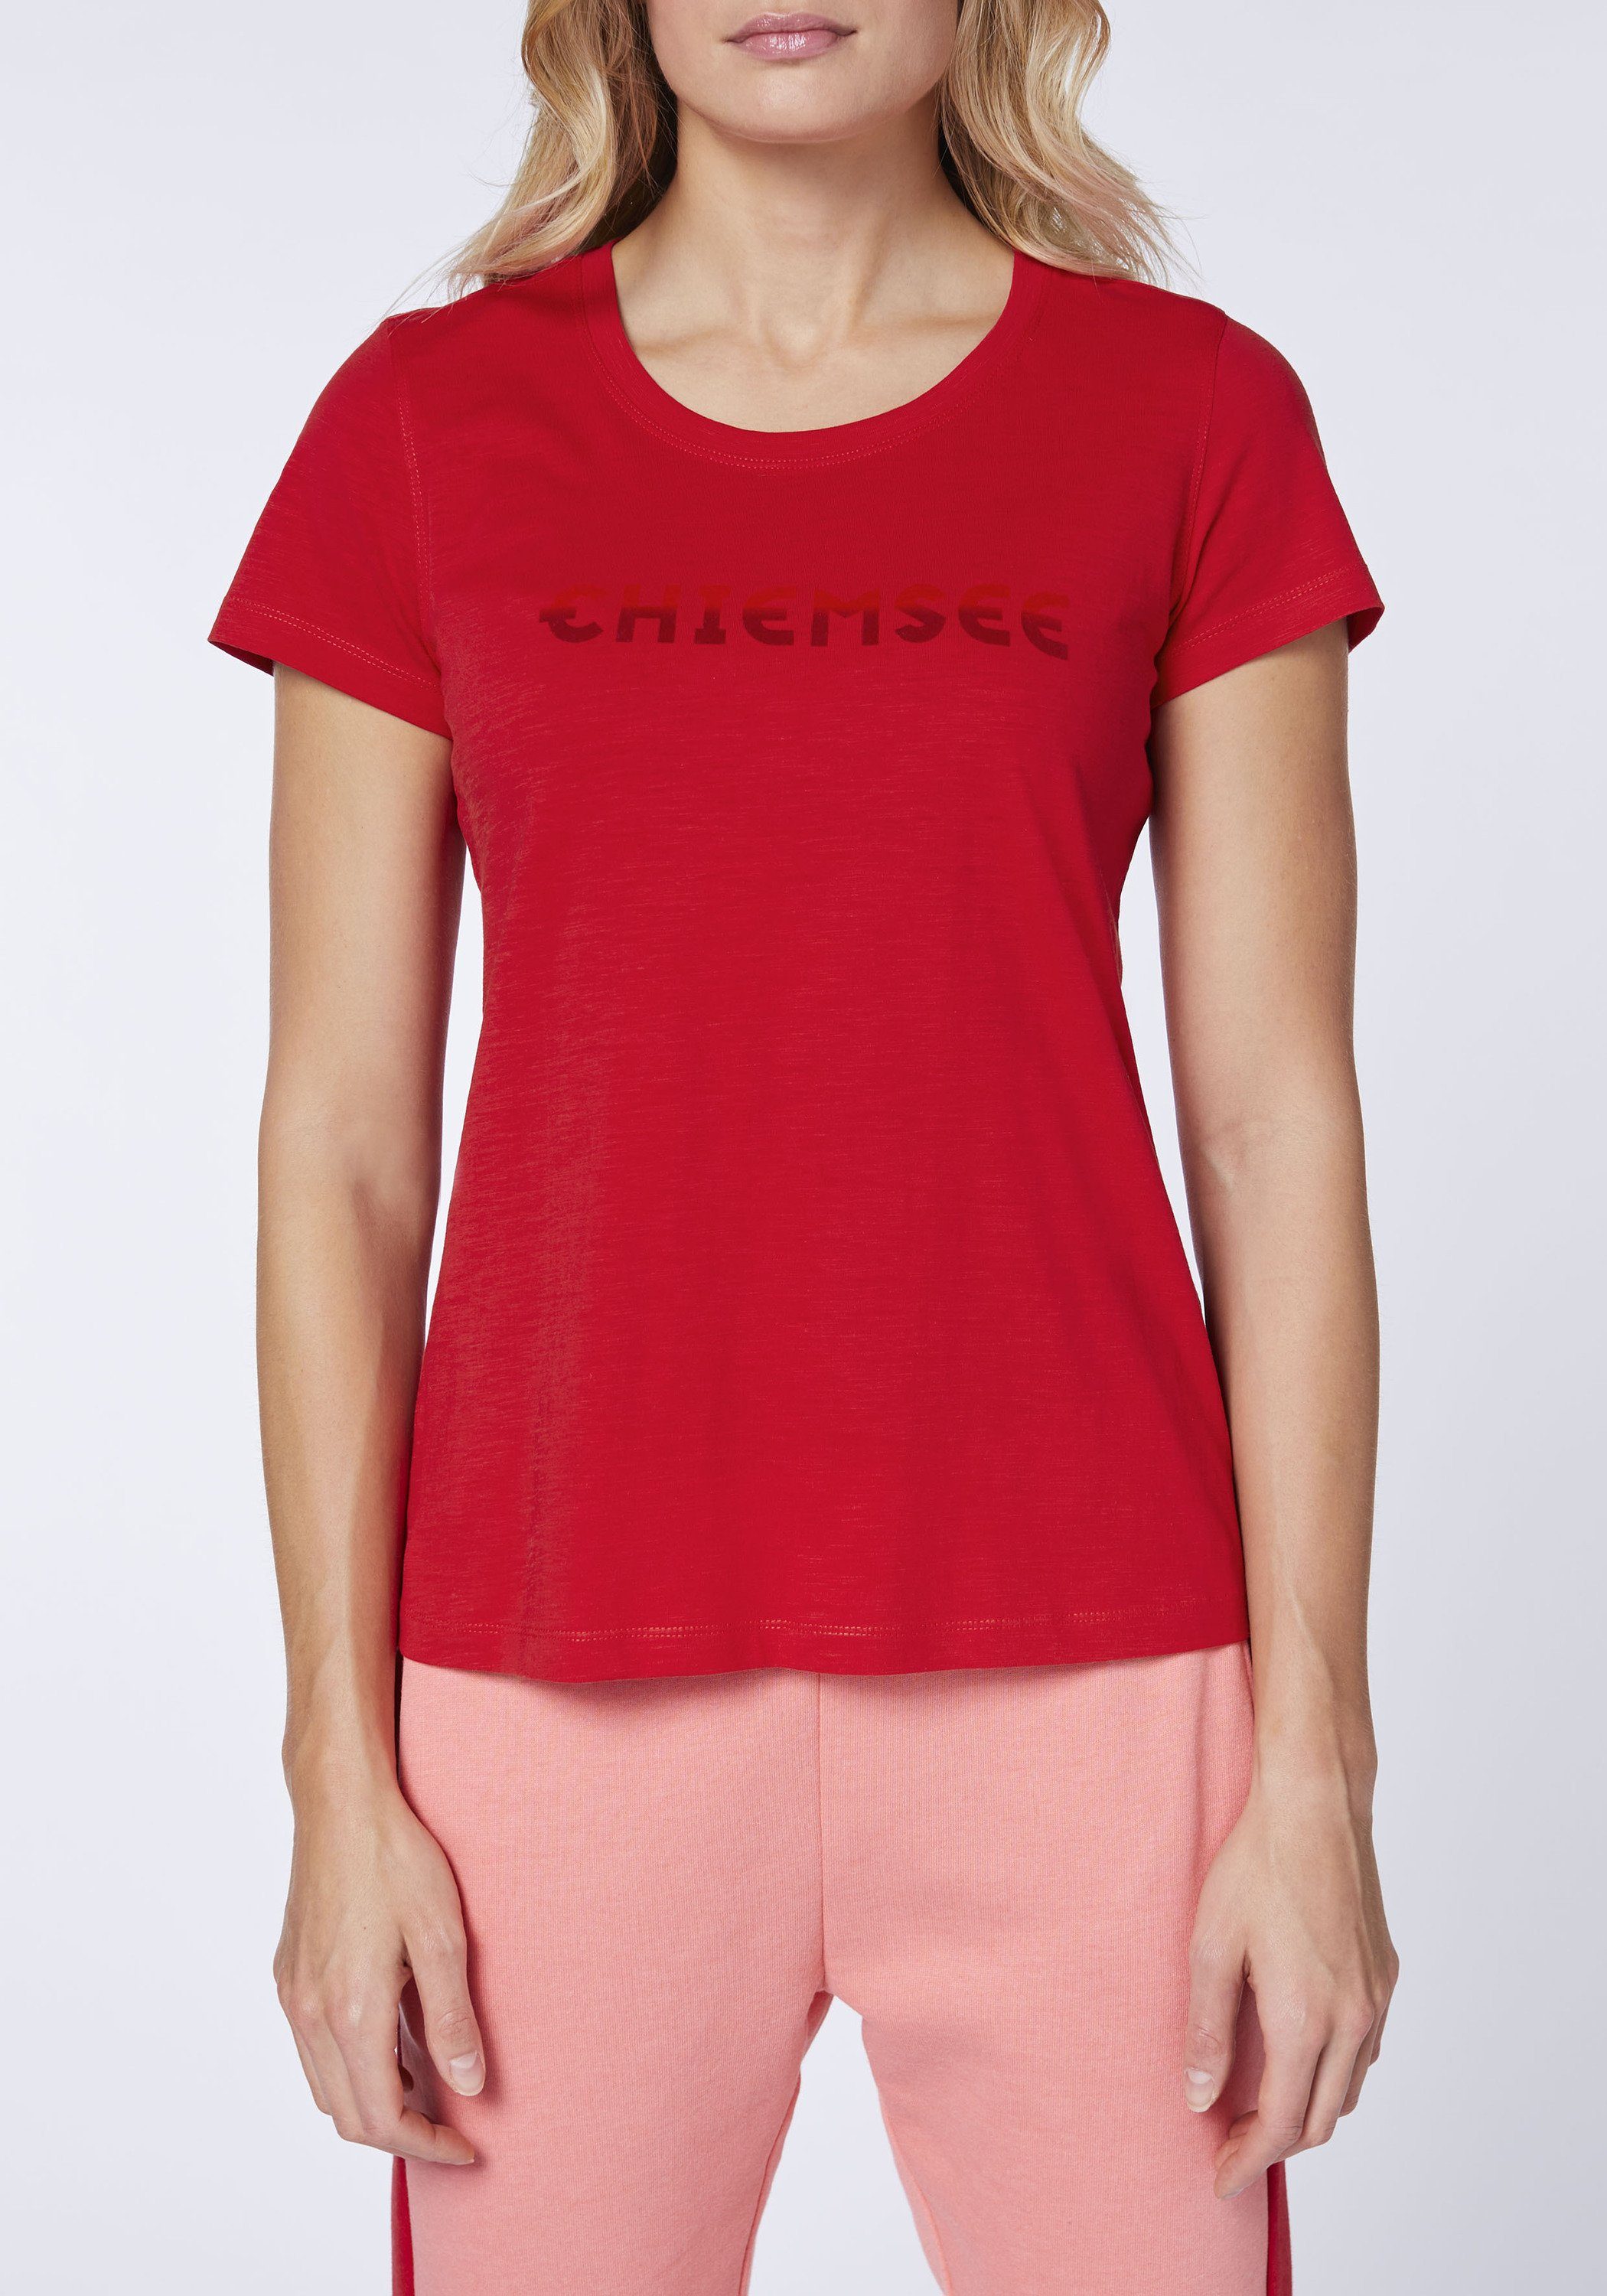 Chiemsee Print-Shirt mit 1 Toreador in Logo Farbverlauf-Optik T-Shirt